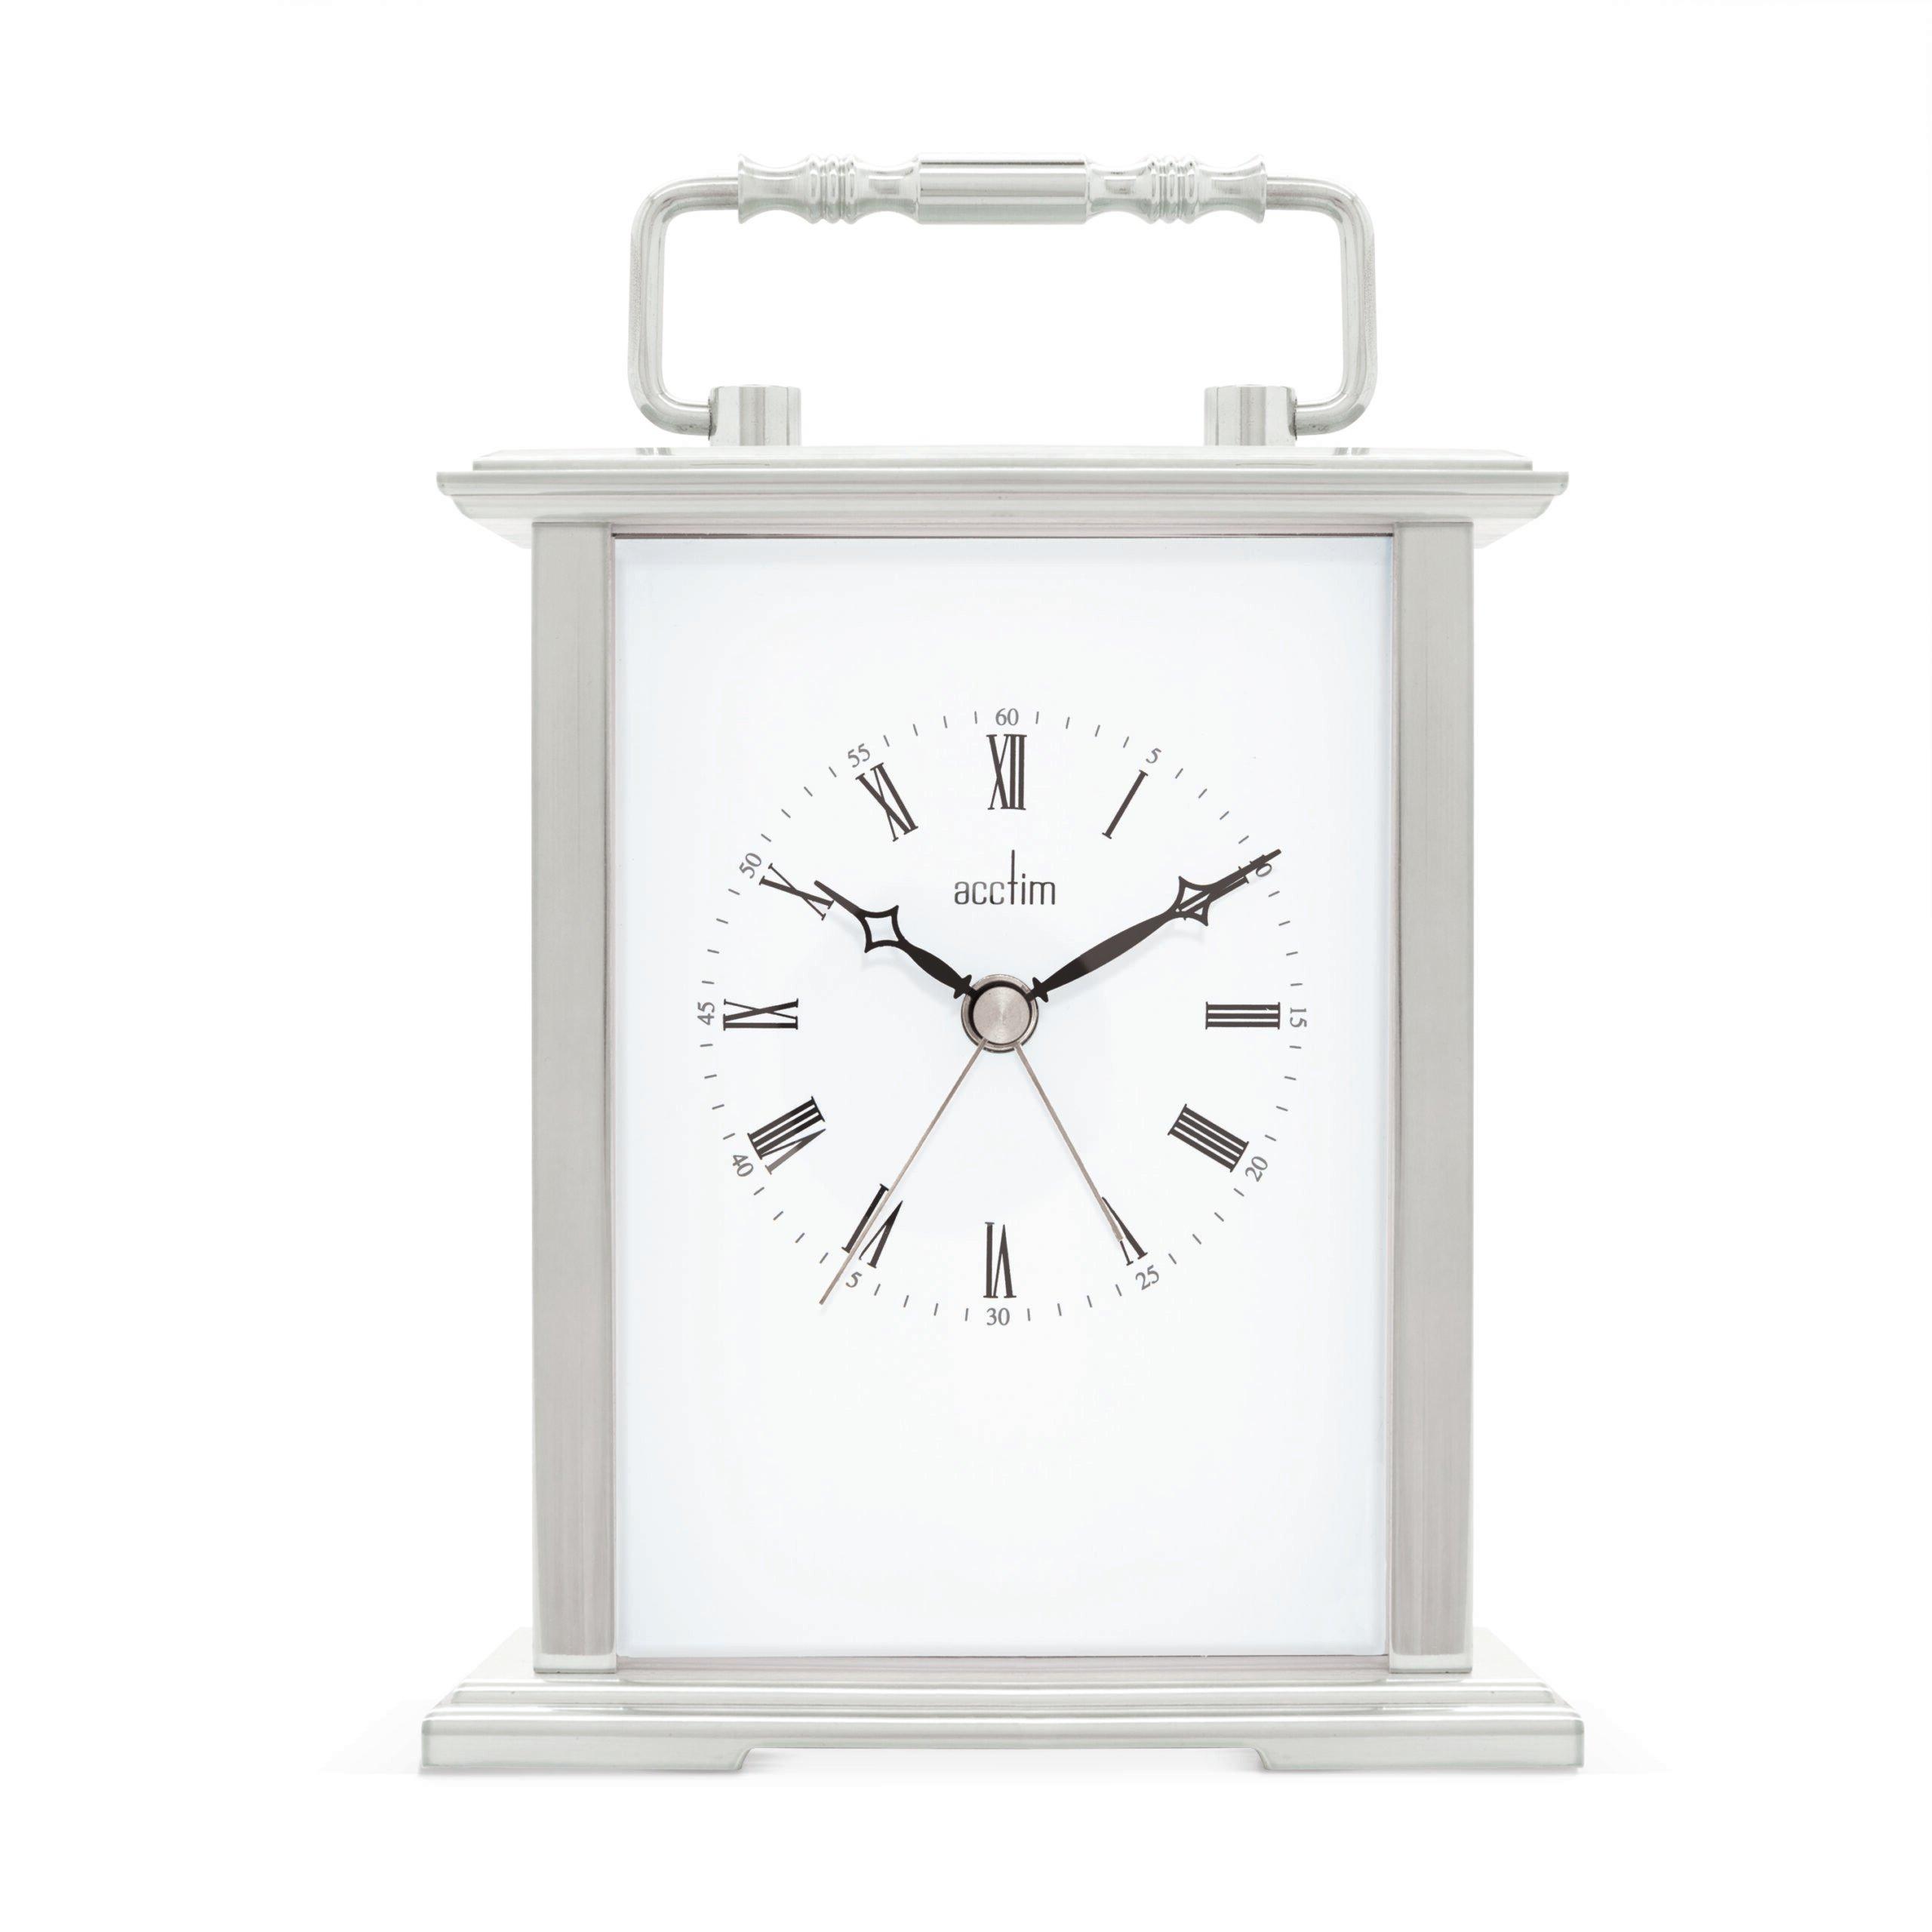 Gainsborough Mantel Clock Quartz Polished Metal Carriage Clock Energy Efficient Movement